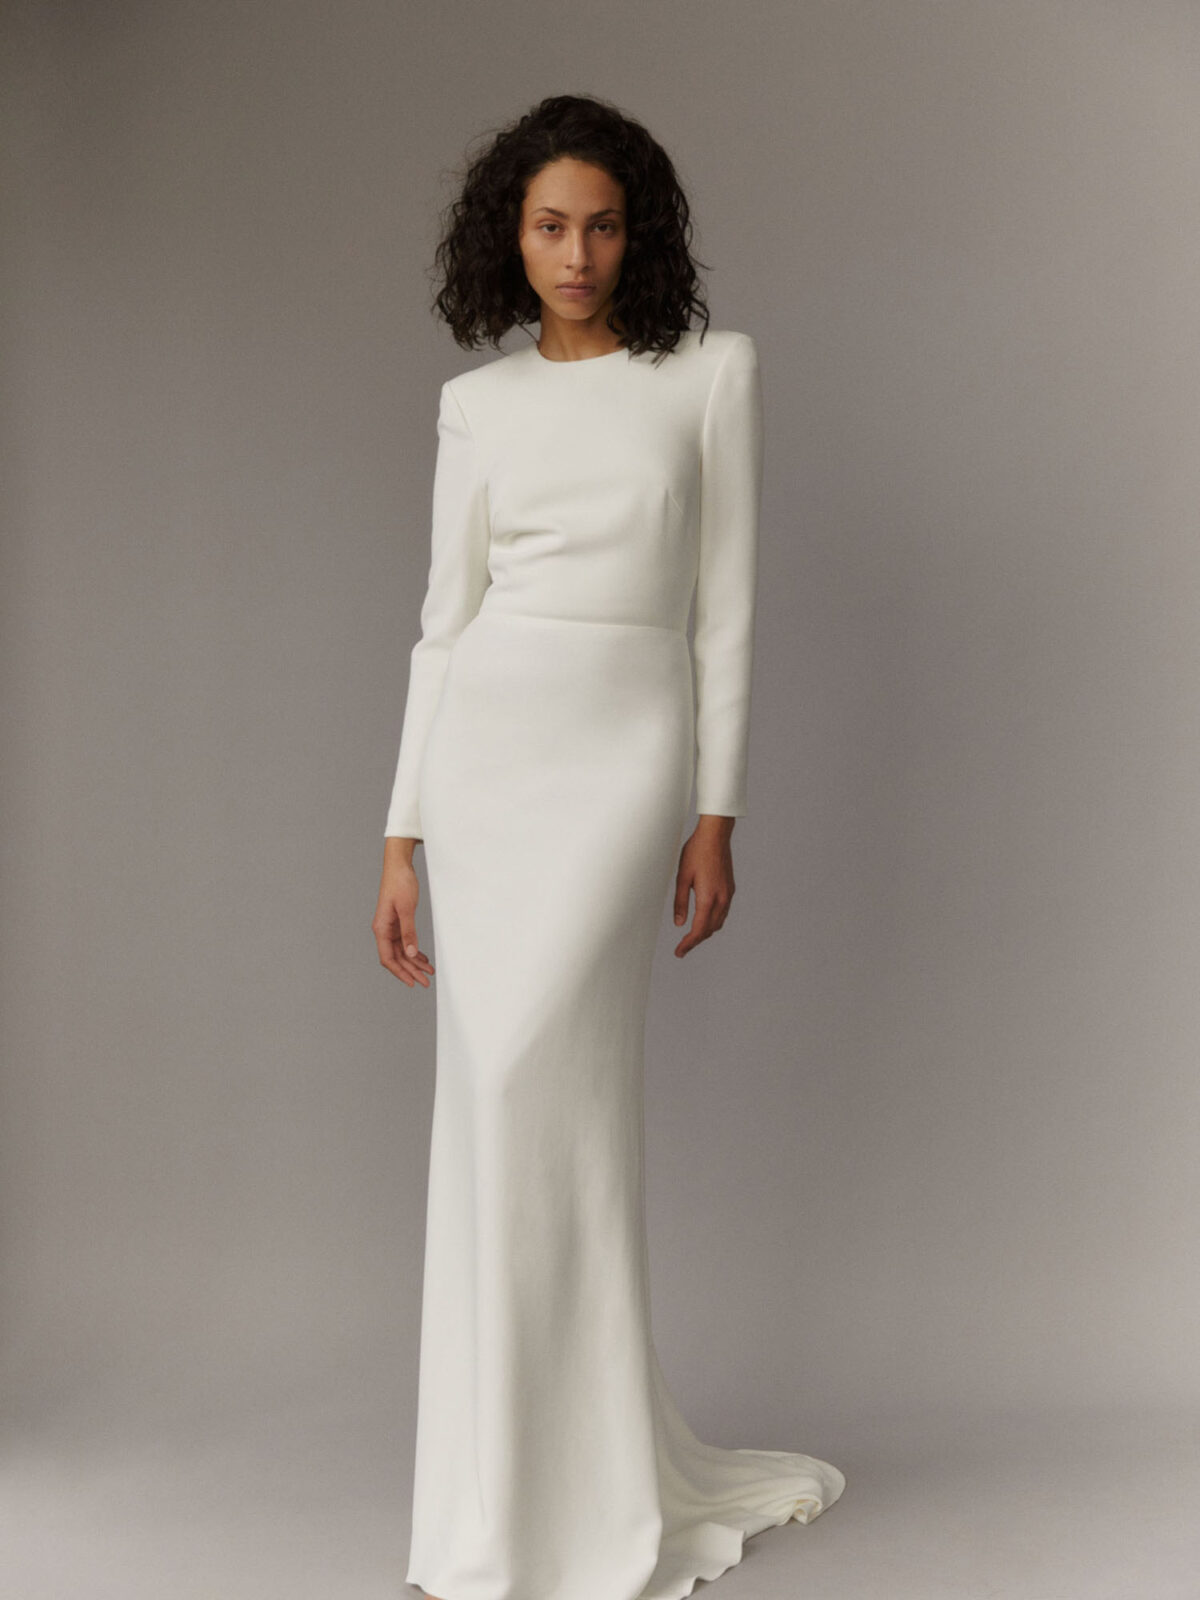 long sleeve minimalist wedding dress in ivory heavy crepe